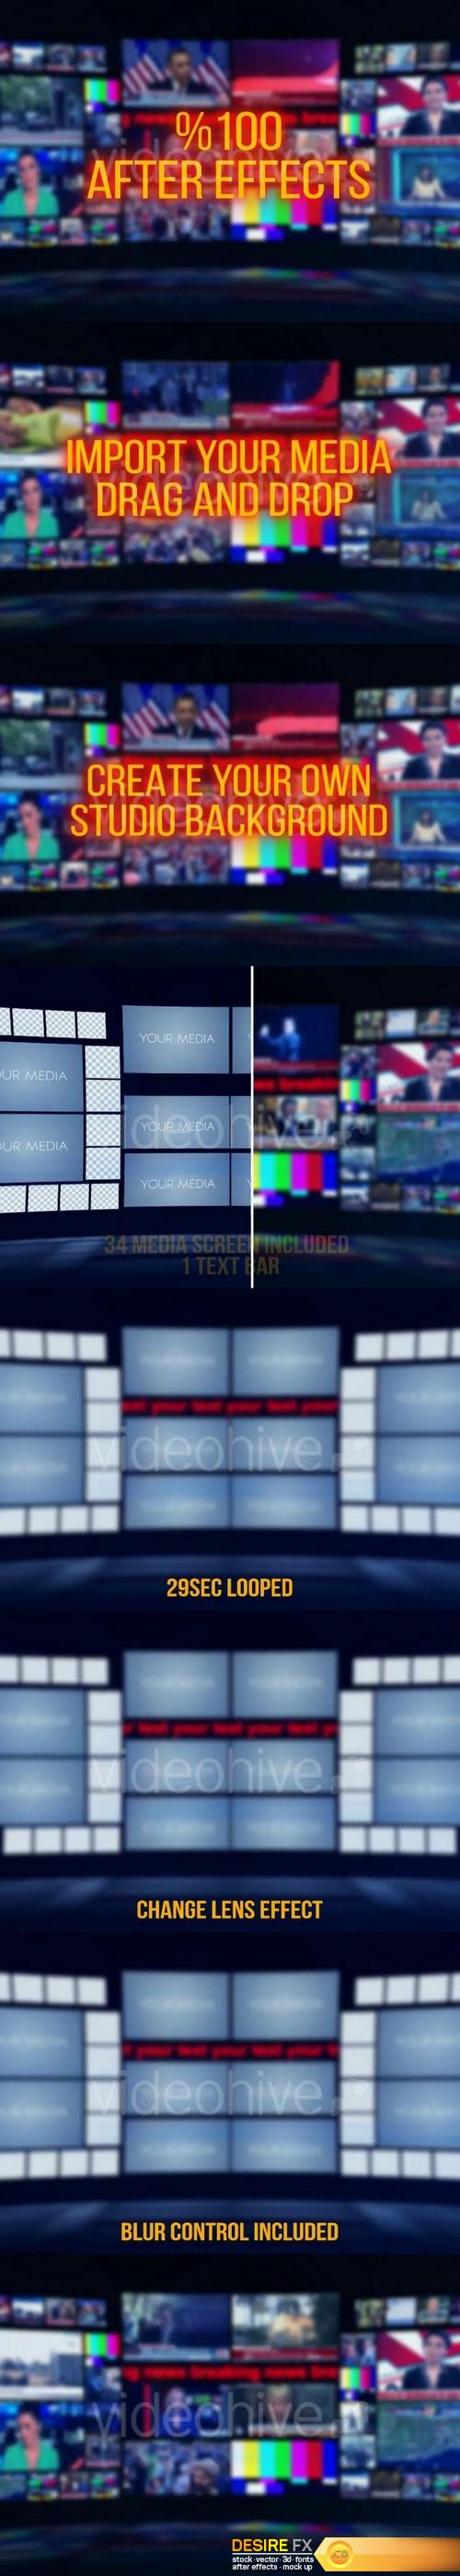 videohive-19583069-tv-studio-background